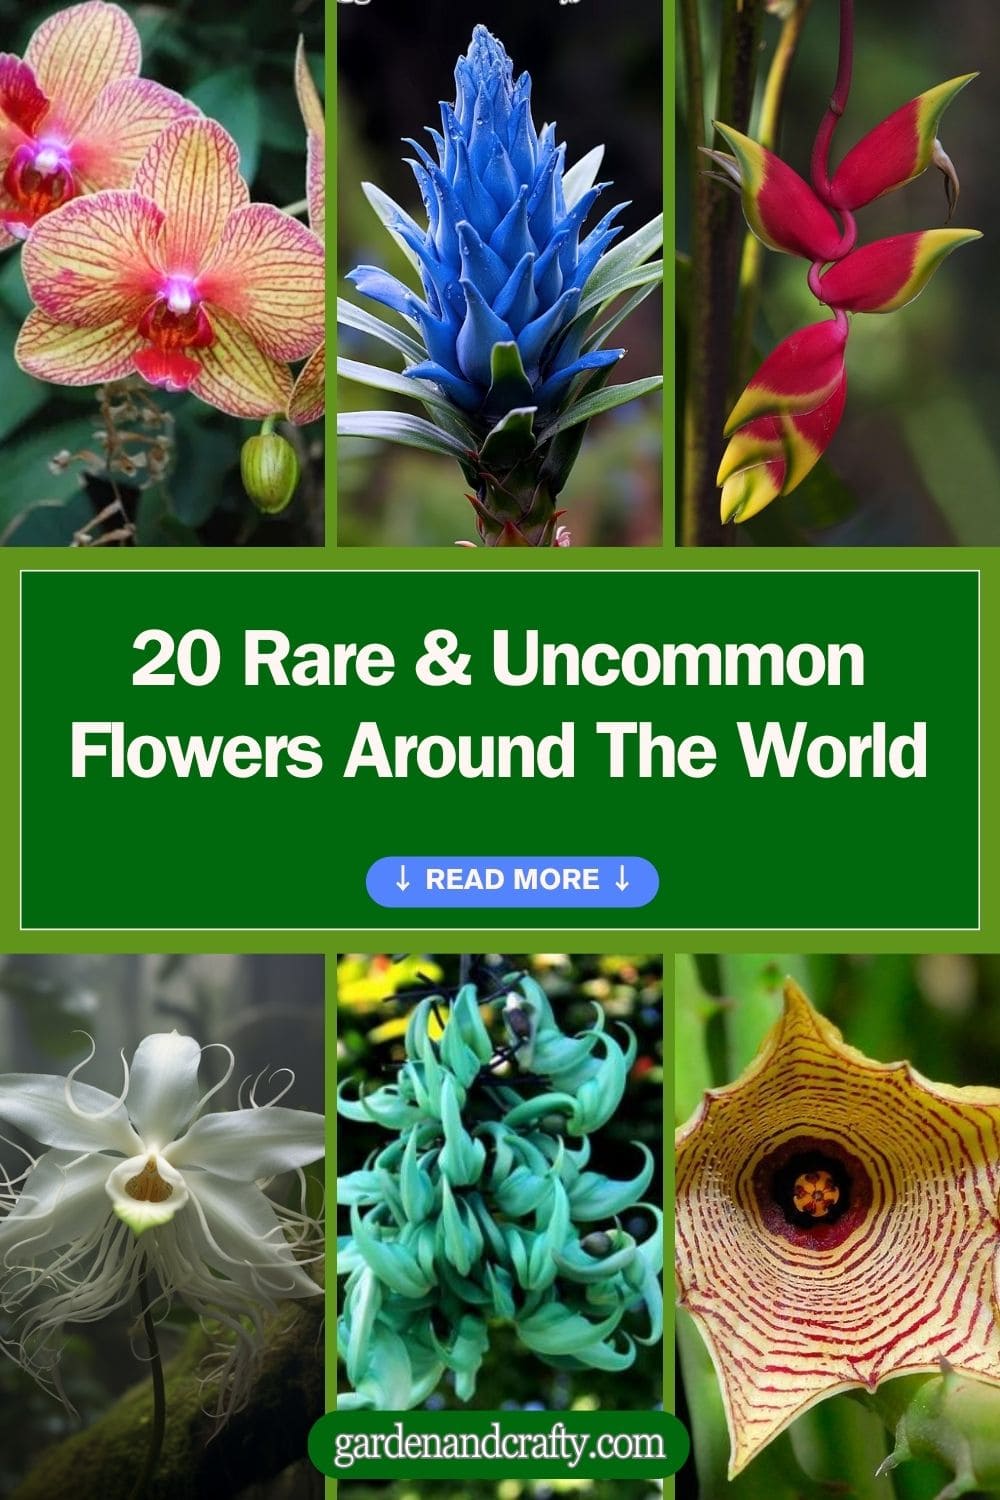 20 Rare & Uncommon Flowers Around The World